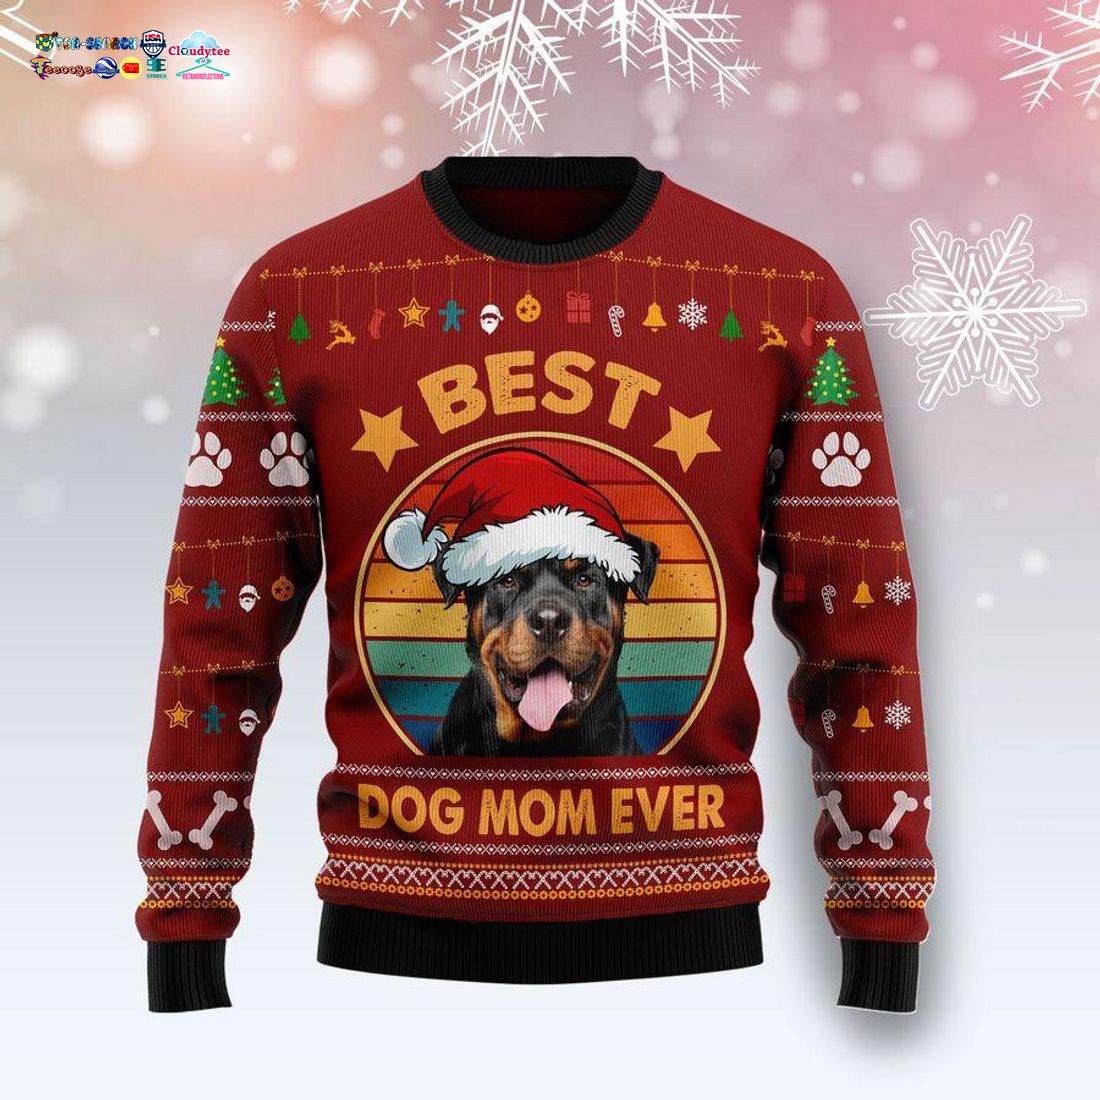 rottweiler-best-dog-mom-ever-ugly-christmas-sweater-1-N4kdj.jpg